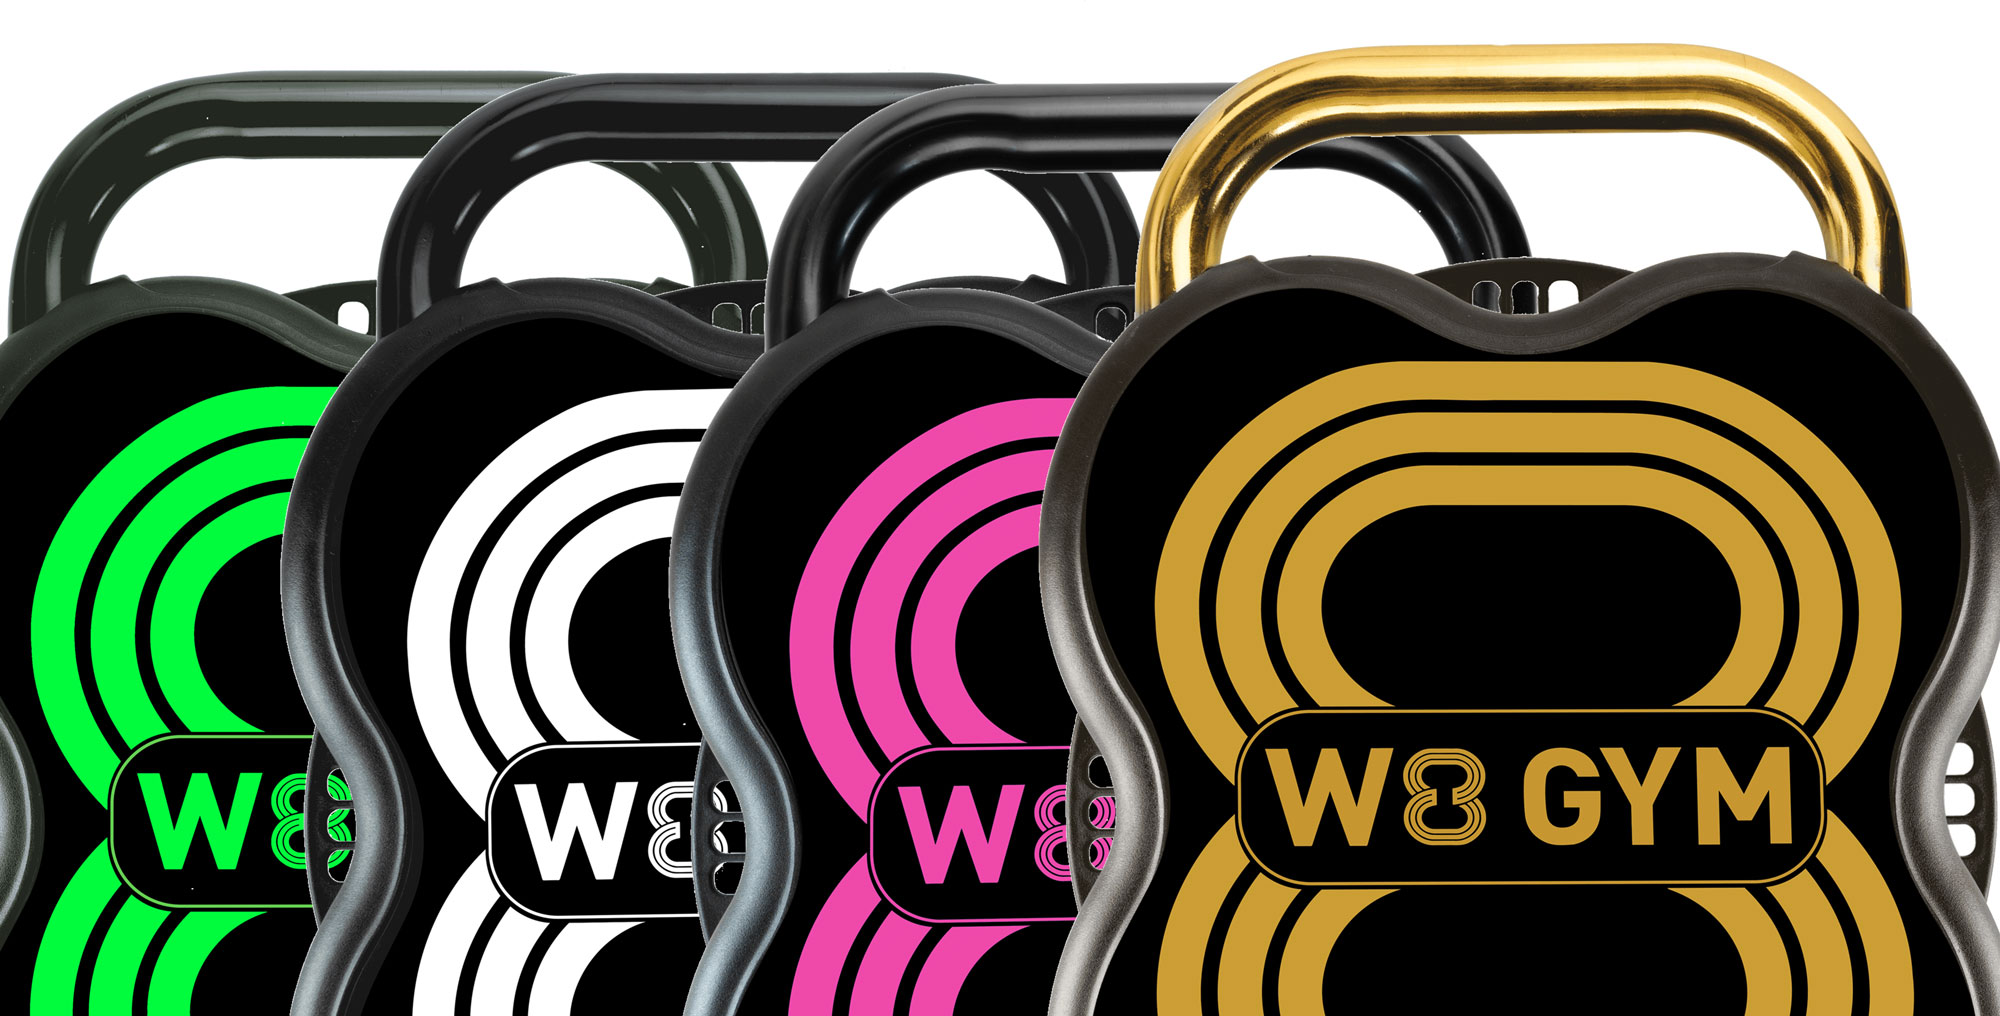 New design ALL colours - W8 GYM